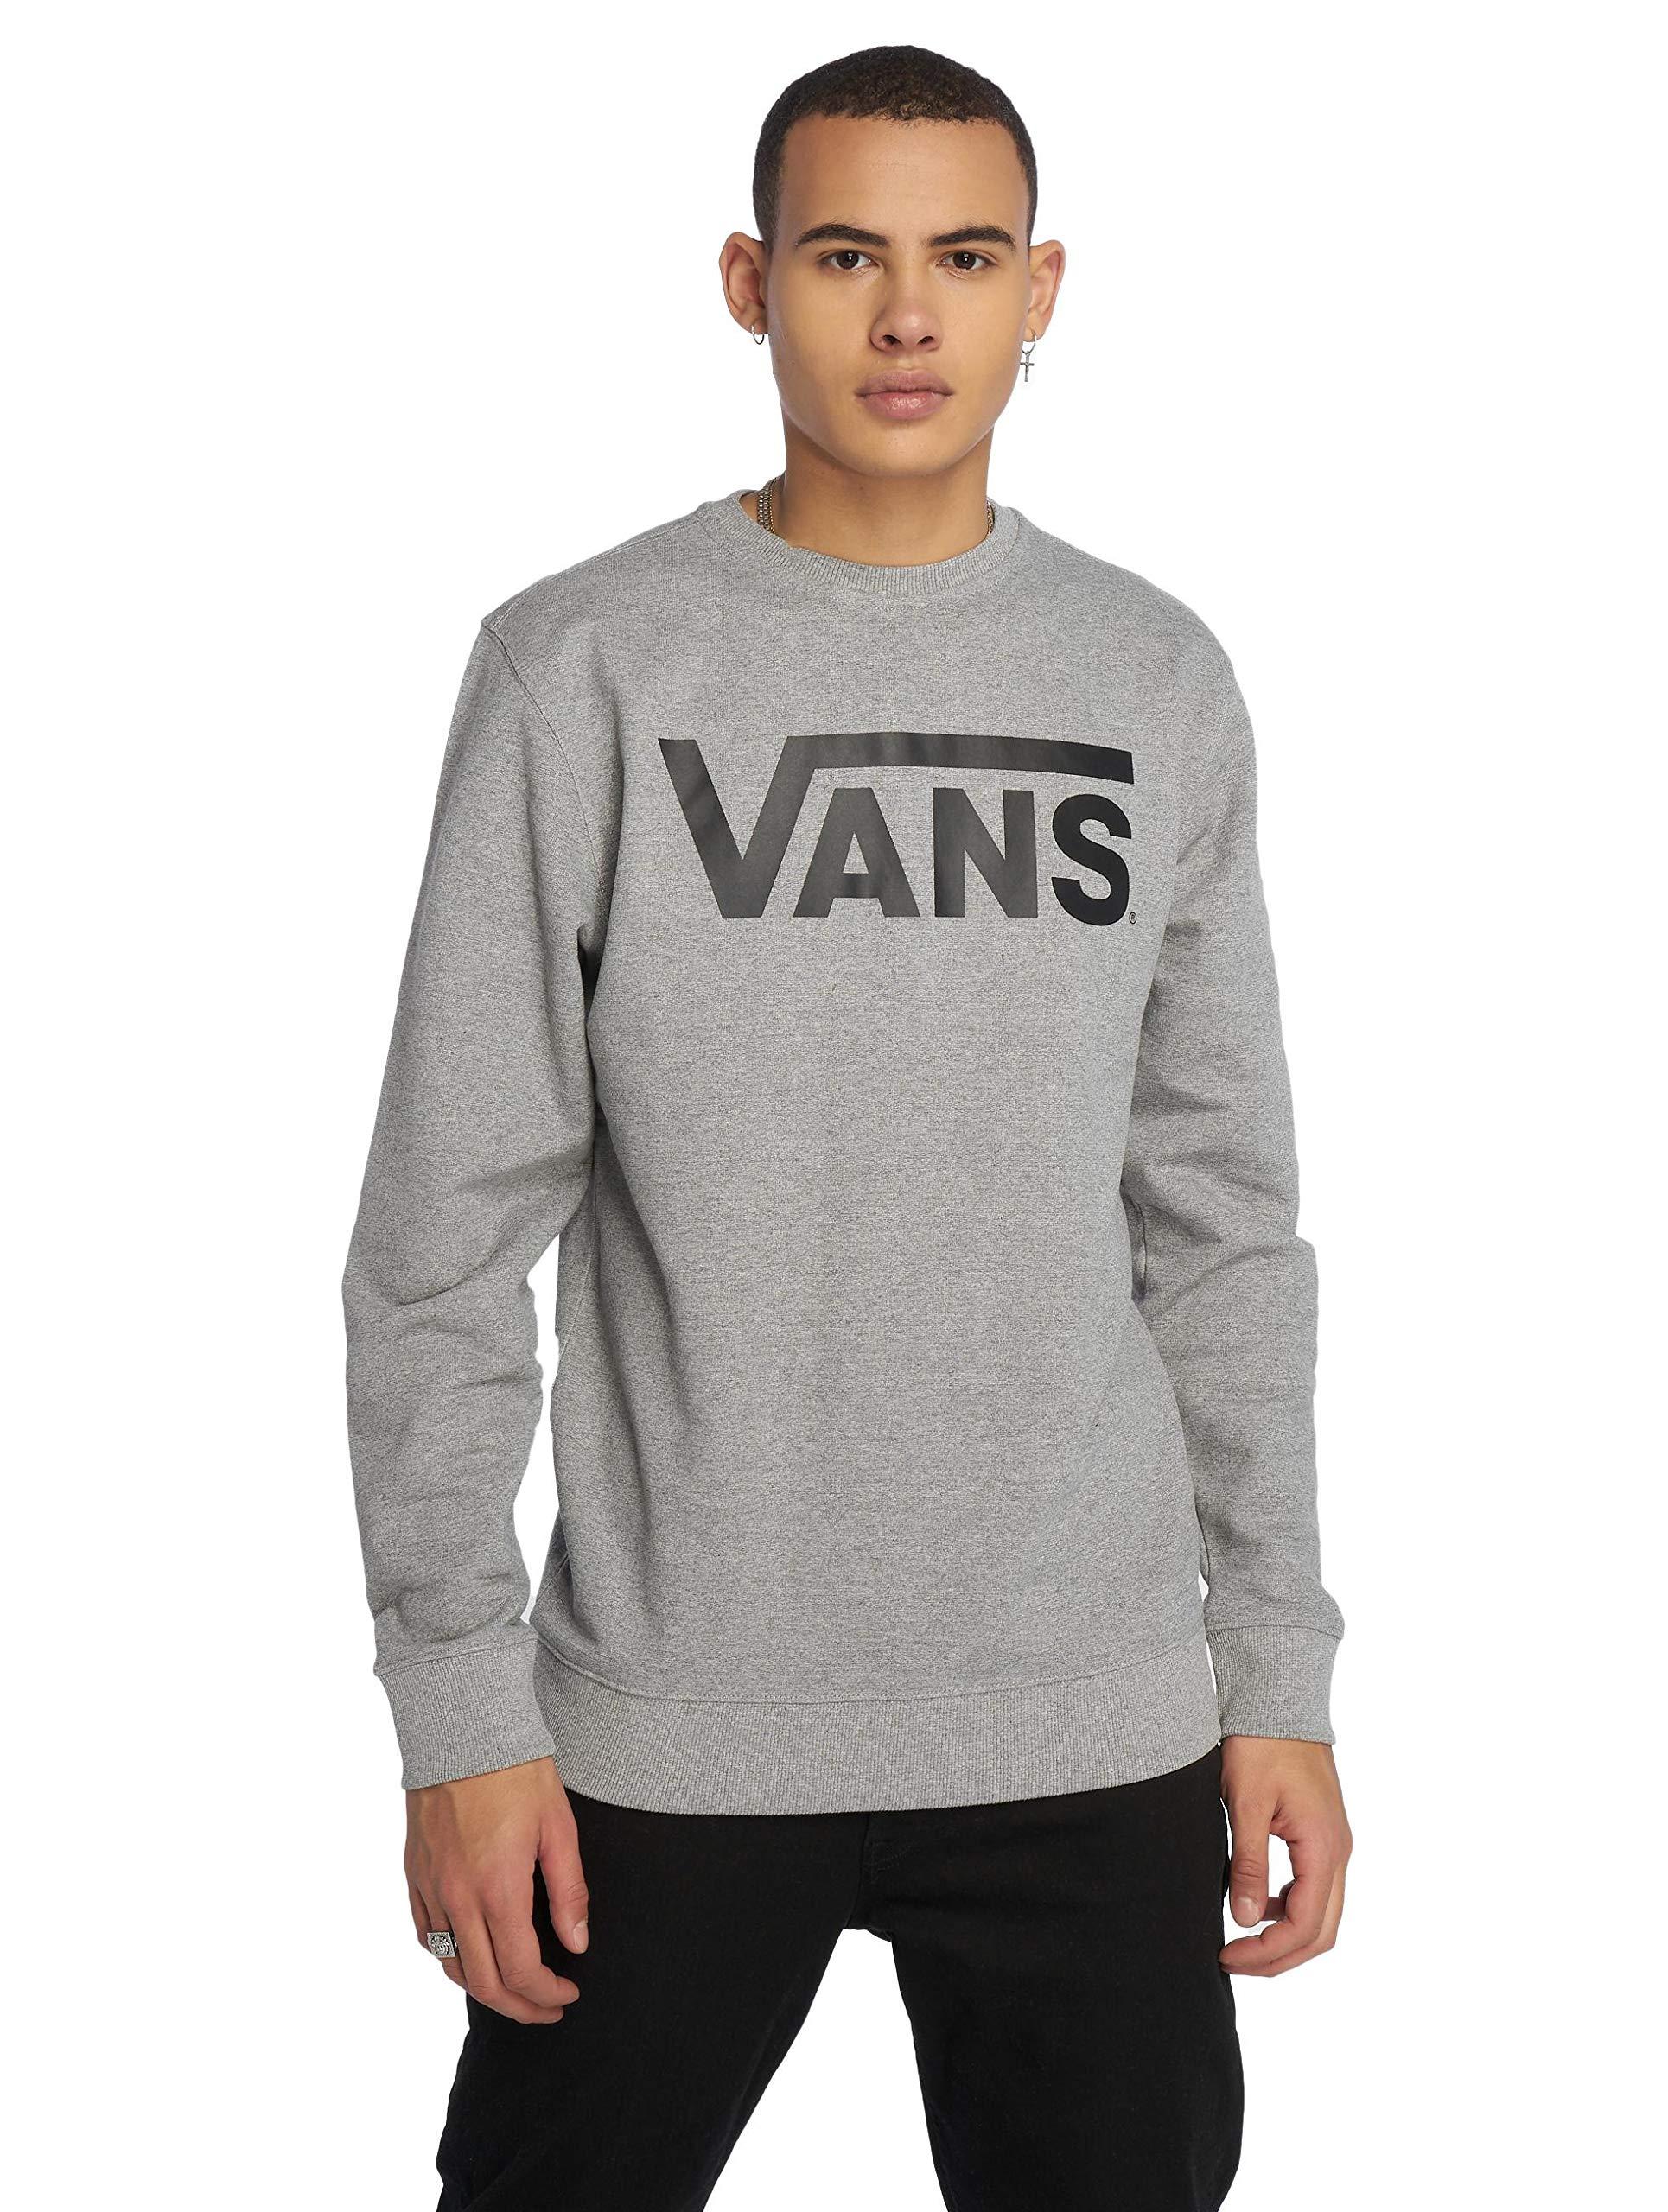 Vans Cotton Embroidered Logo Sweatshirt in Grey (Grey) for Men - Save 67% -  Lyst